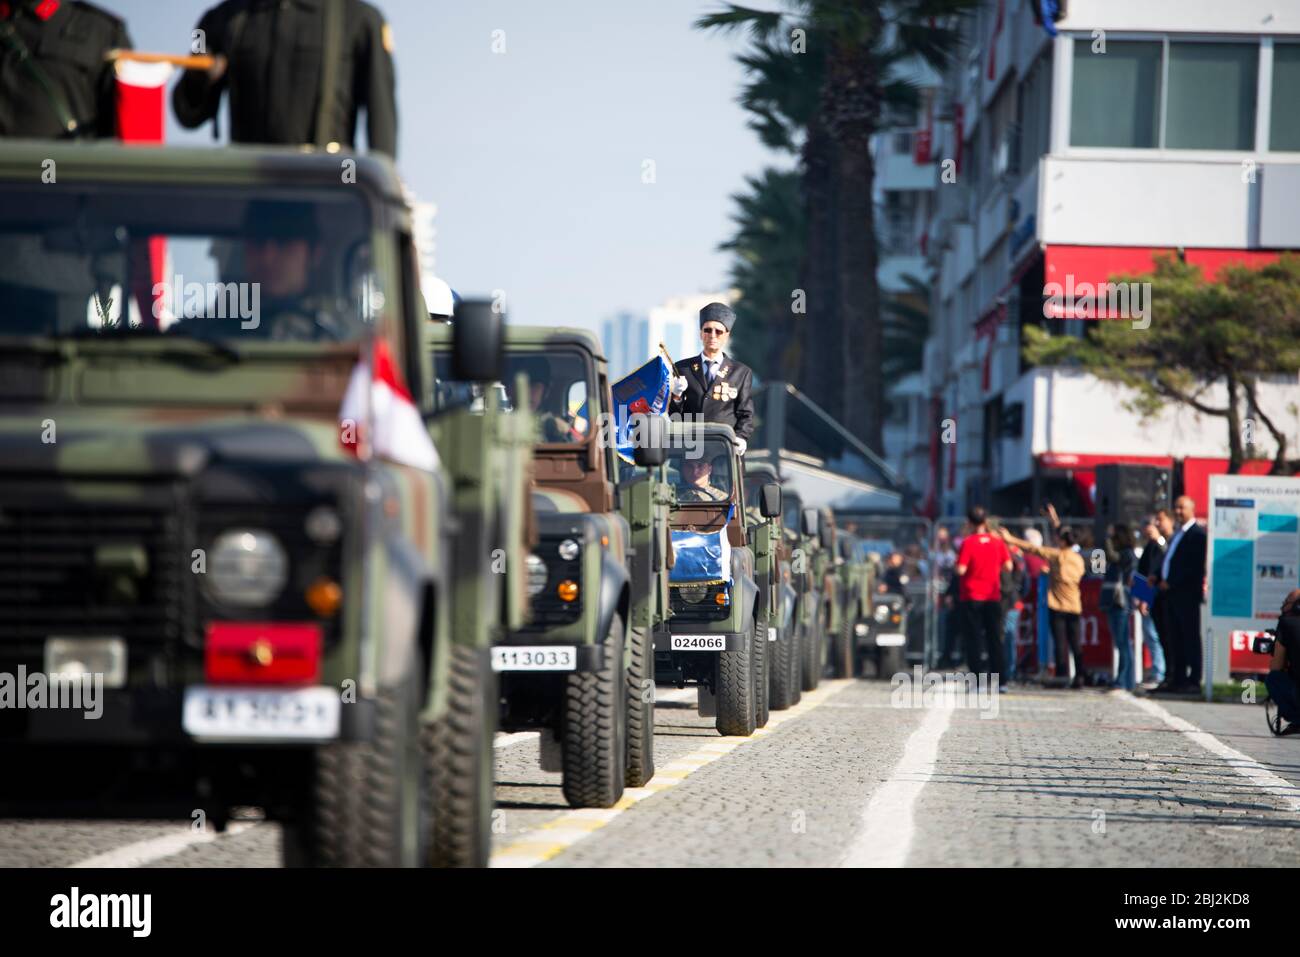 Izmir, Türkei - 29. Oktober 2019. Militärkonvoi SUV auf dem Platz der Republik Izmir Türkei am Tag der Republik Türkei. Stockfoto